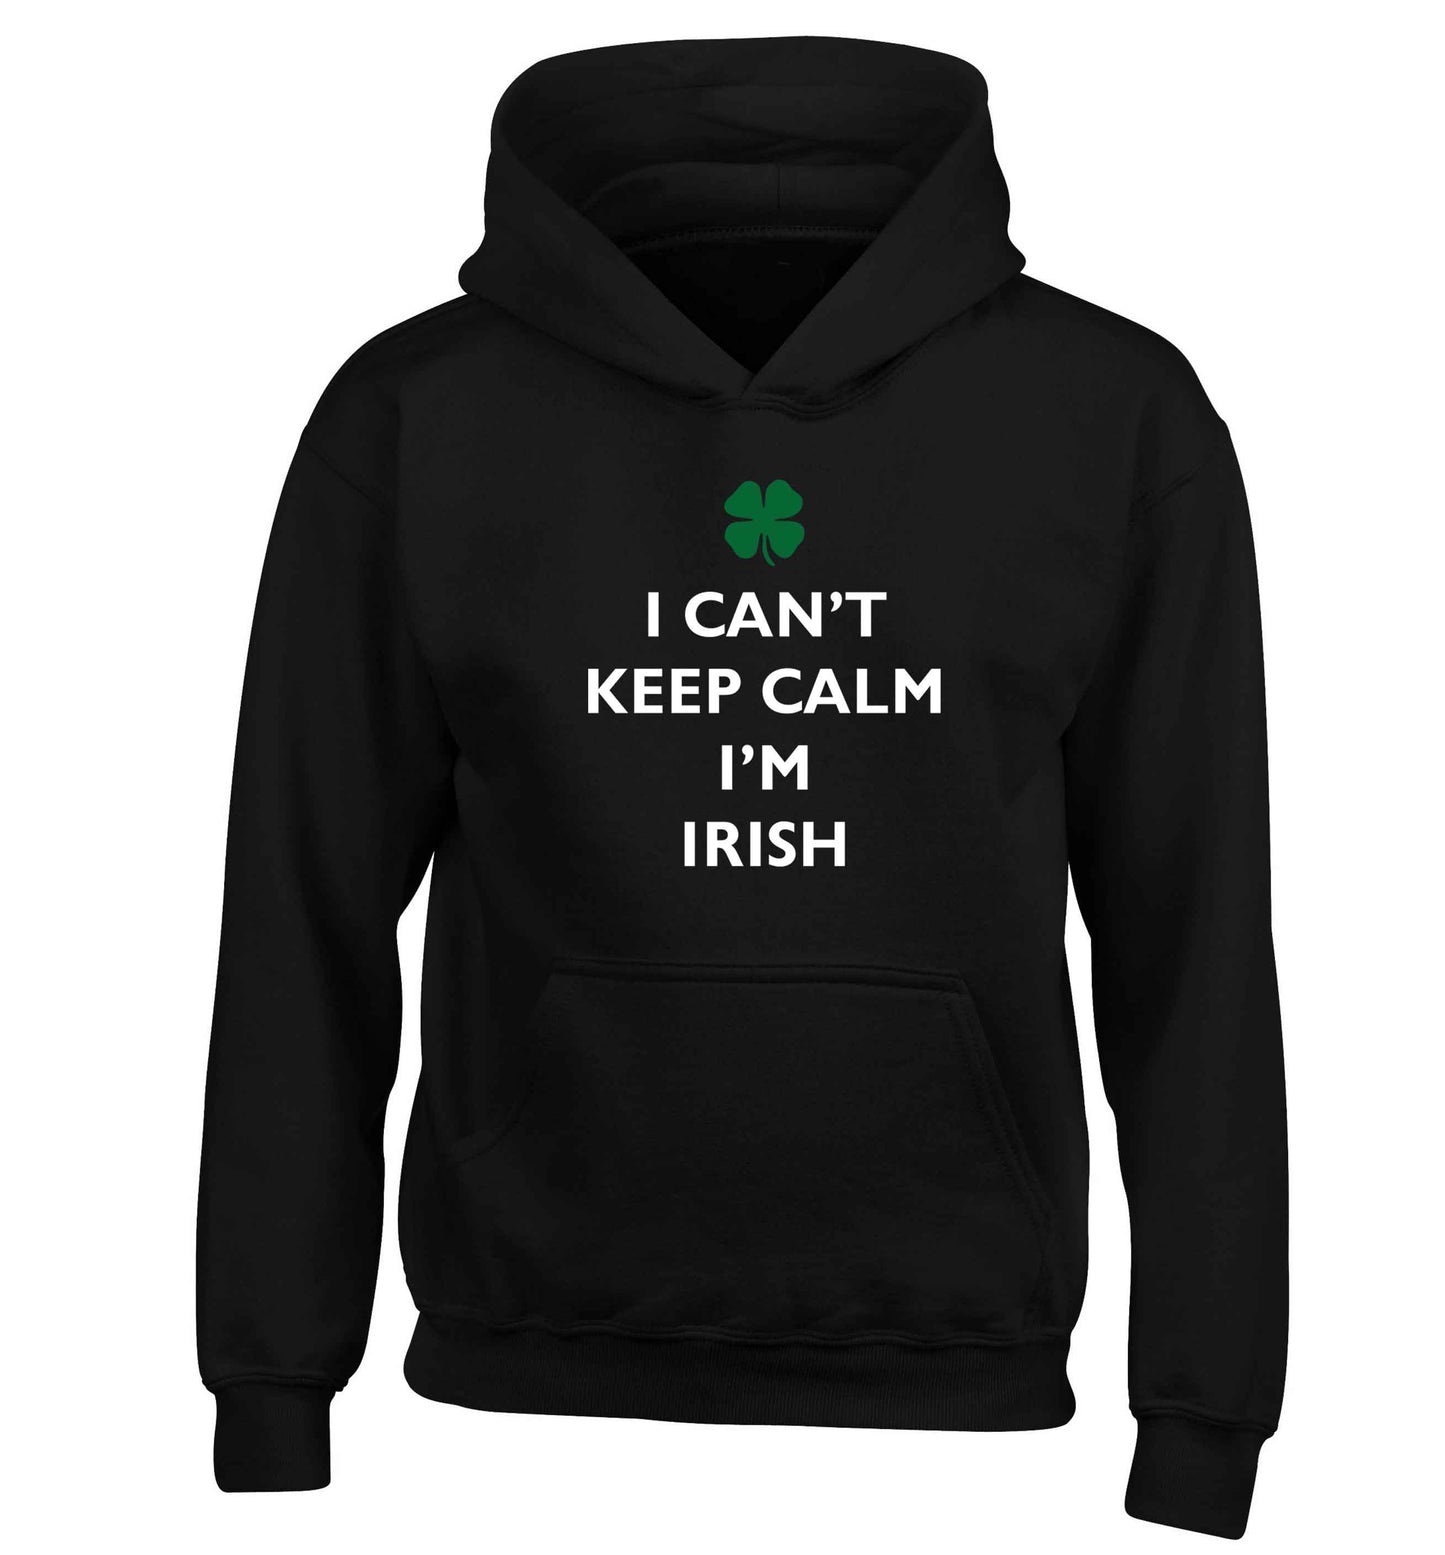 I can't keep calm I'm Irish children's black hoodie 12-13 Years